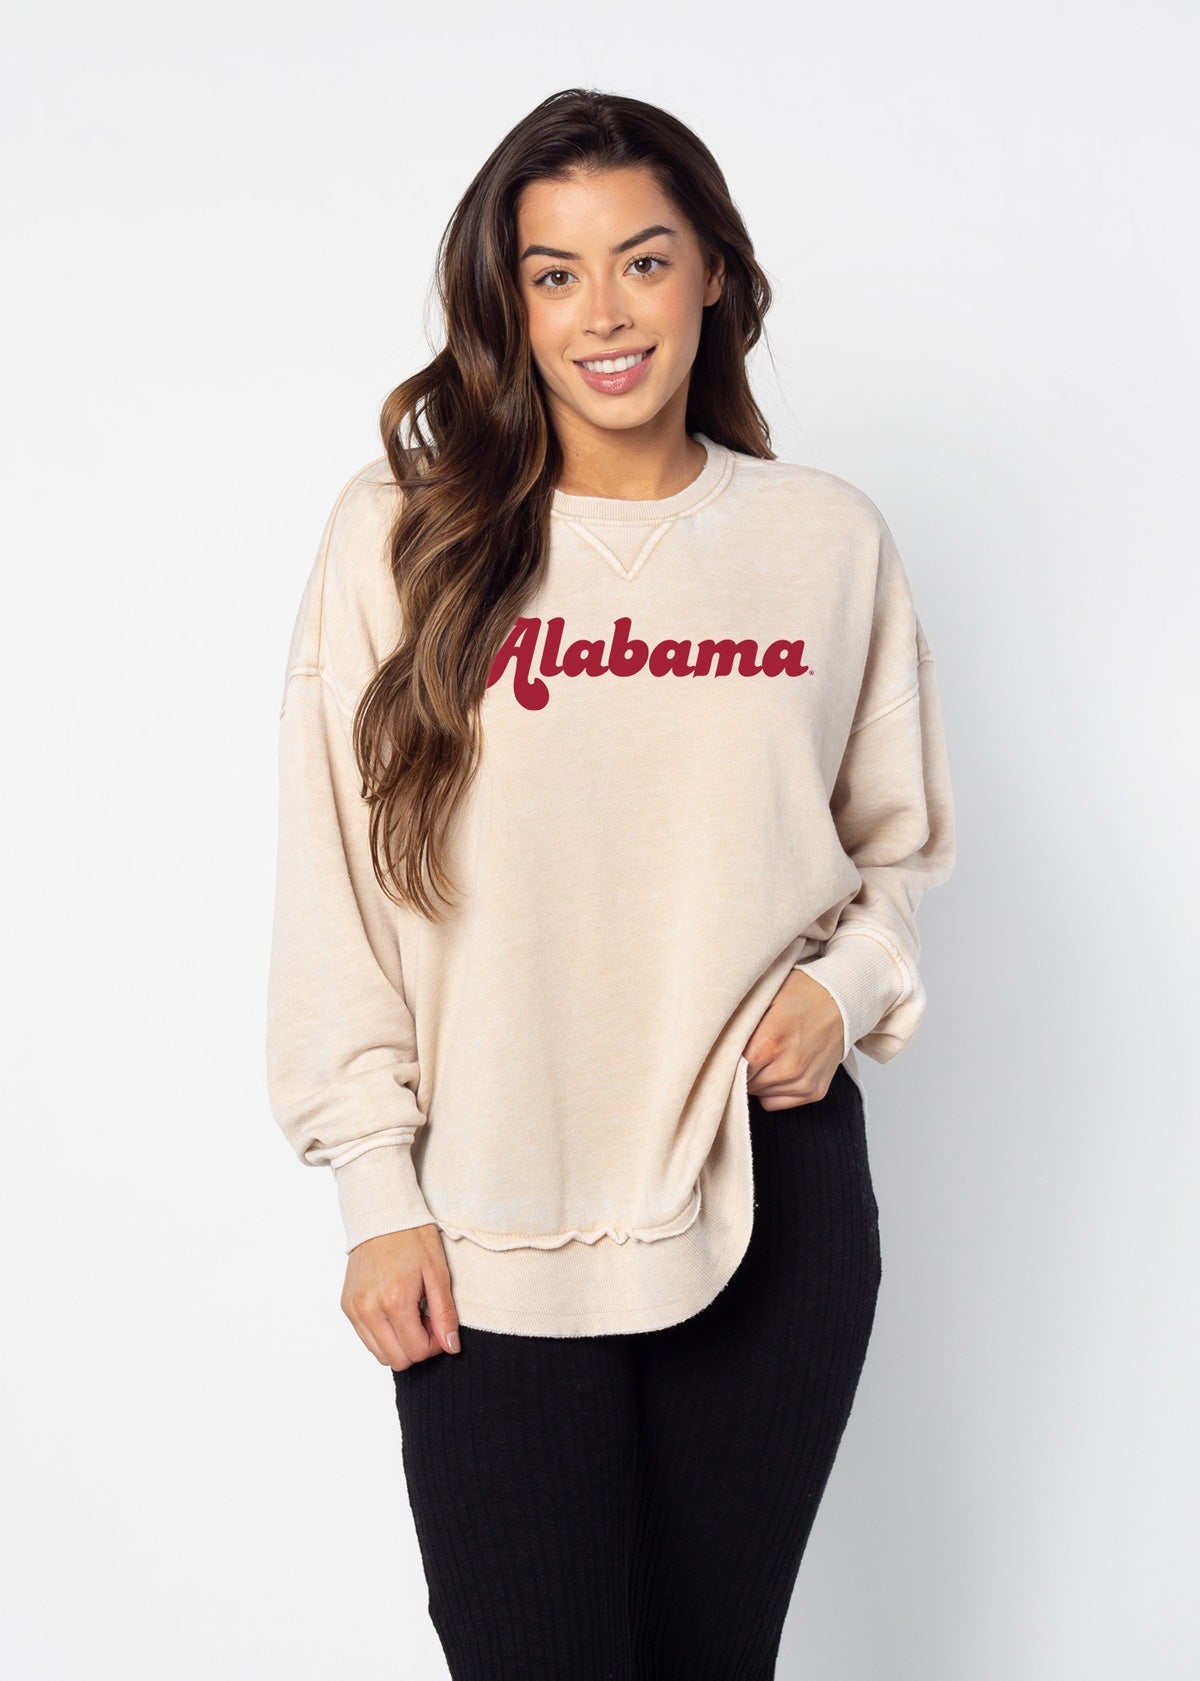 Alabama Crimson Tide sweatshirt